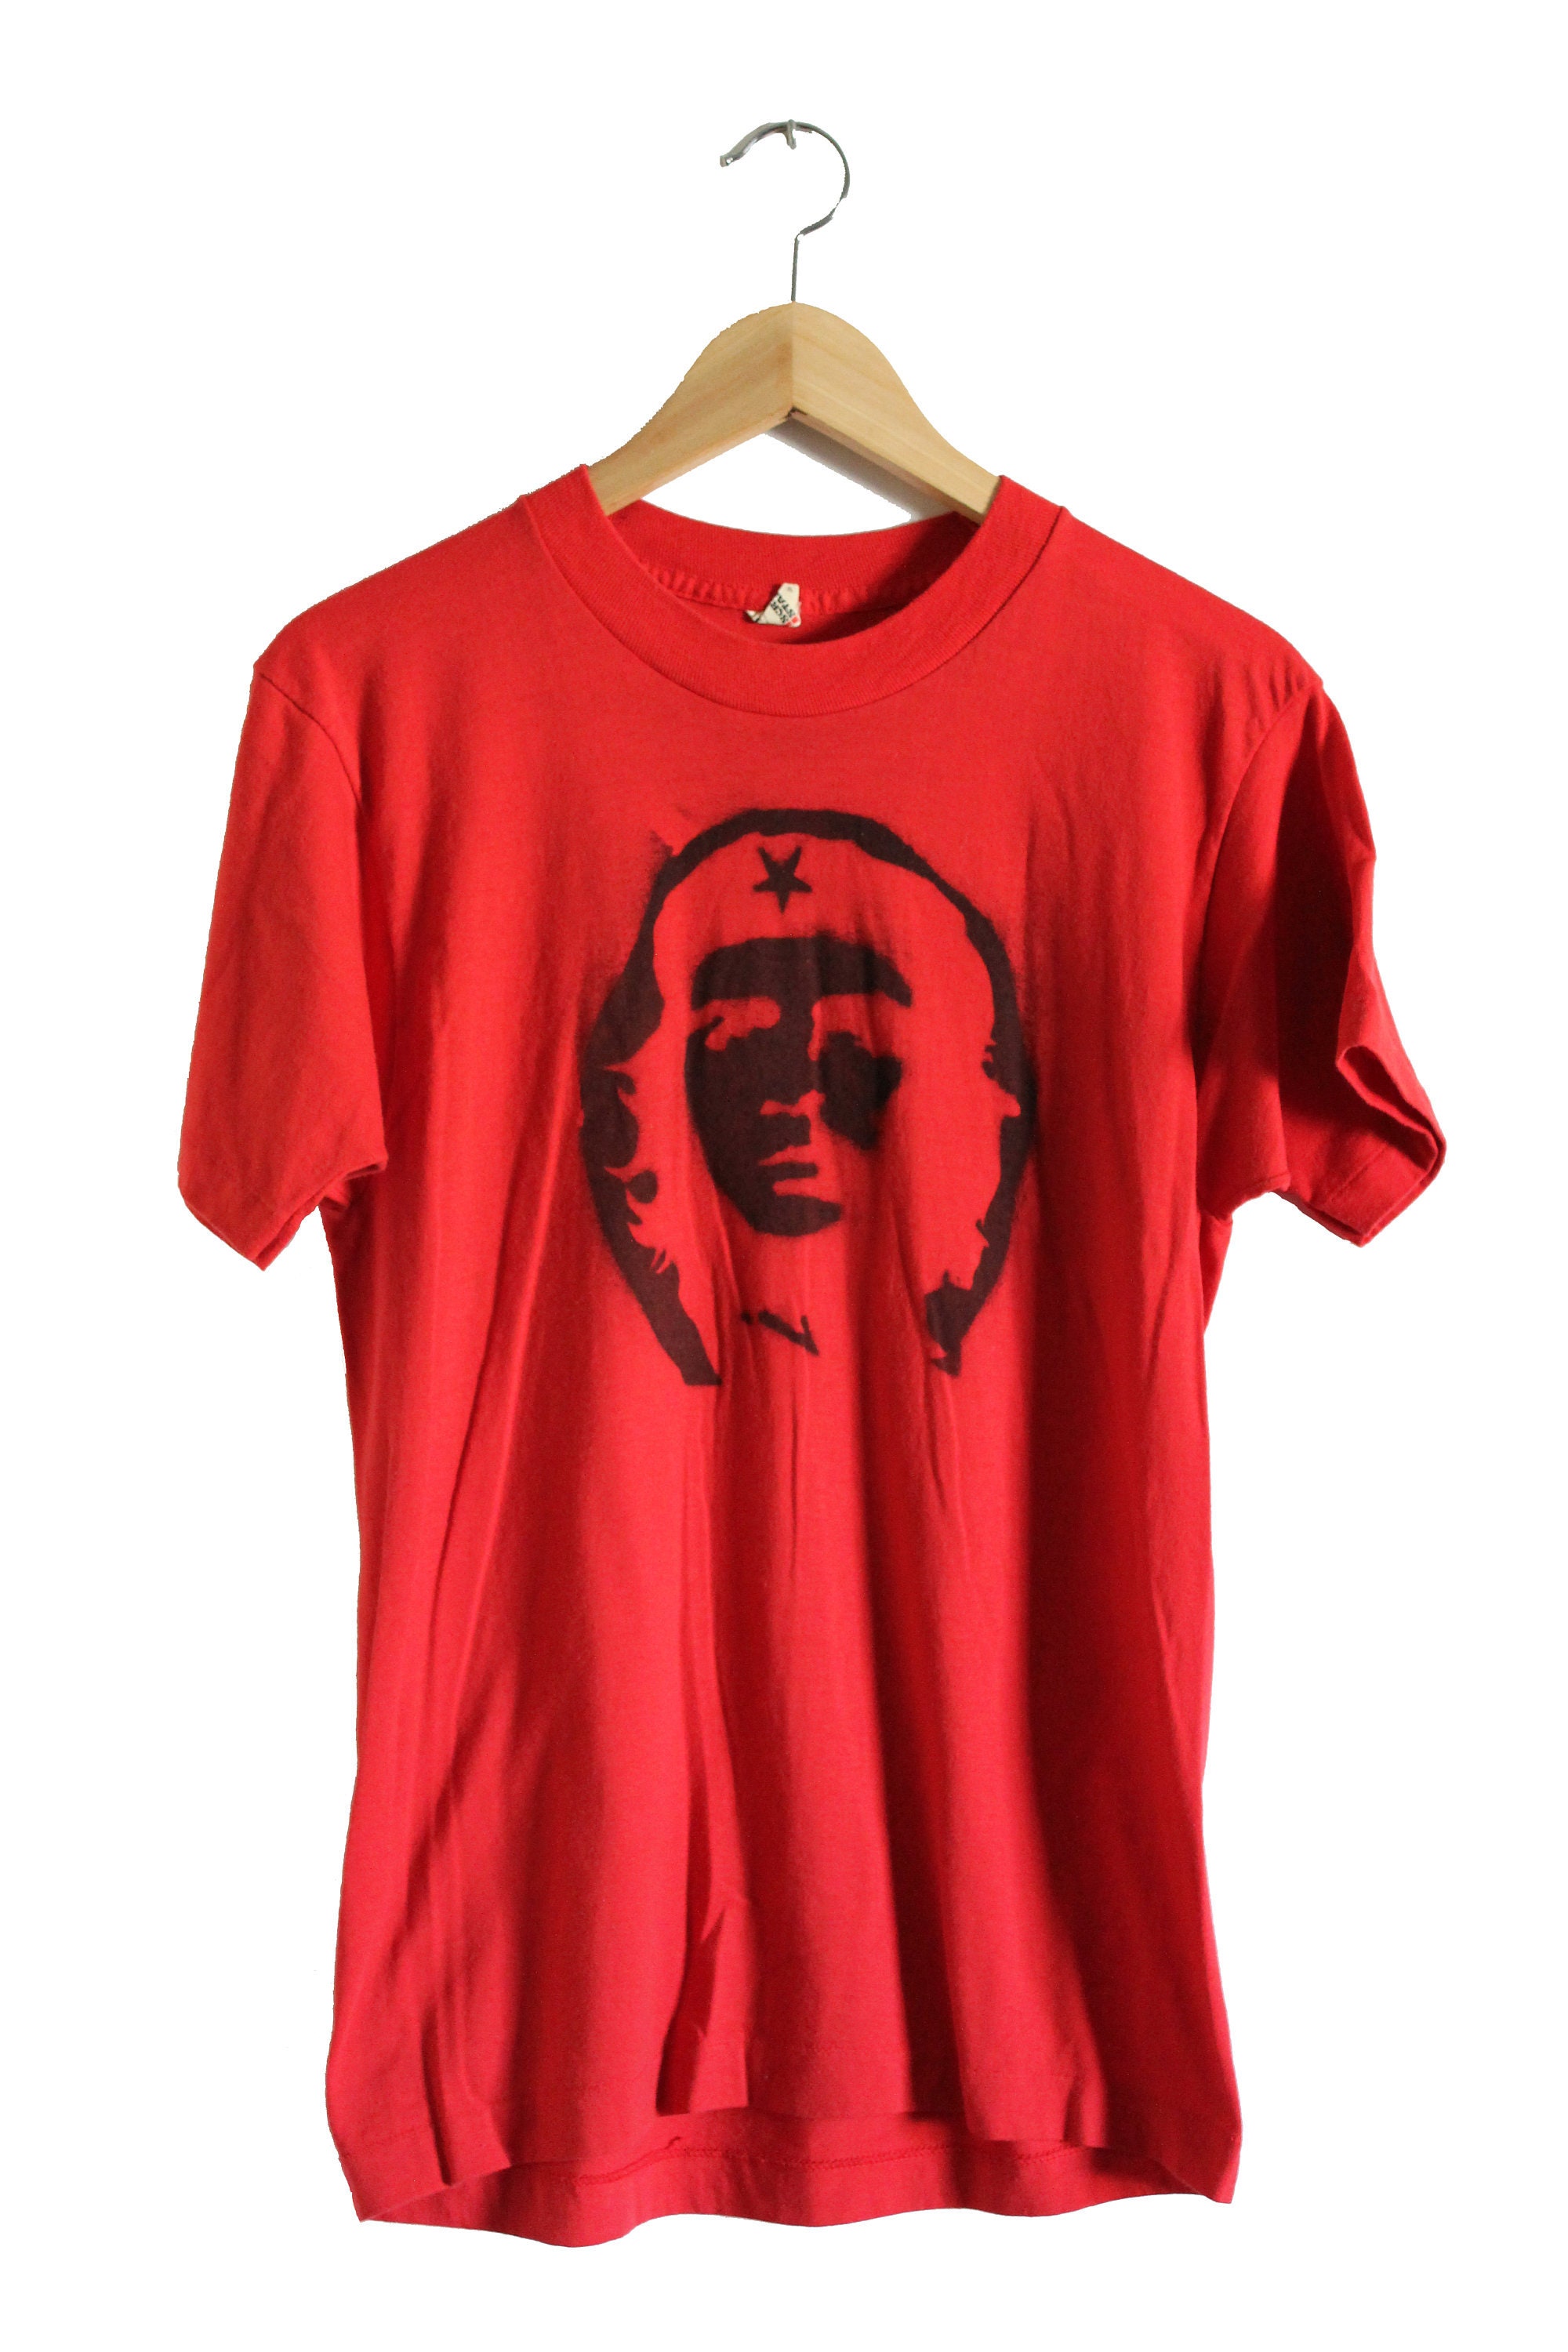 Che Guevara T-shirt Costume : r/funny